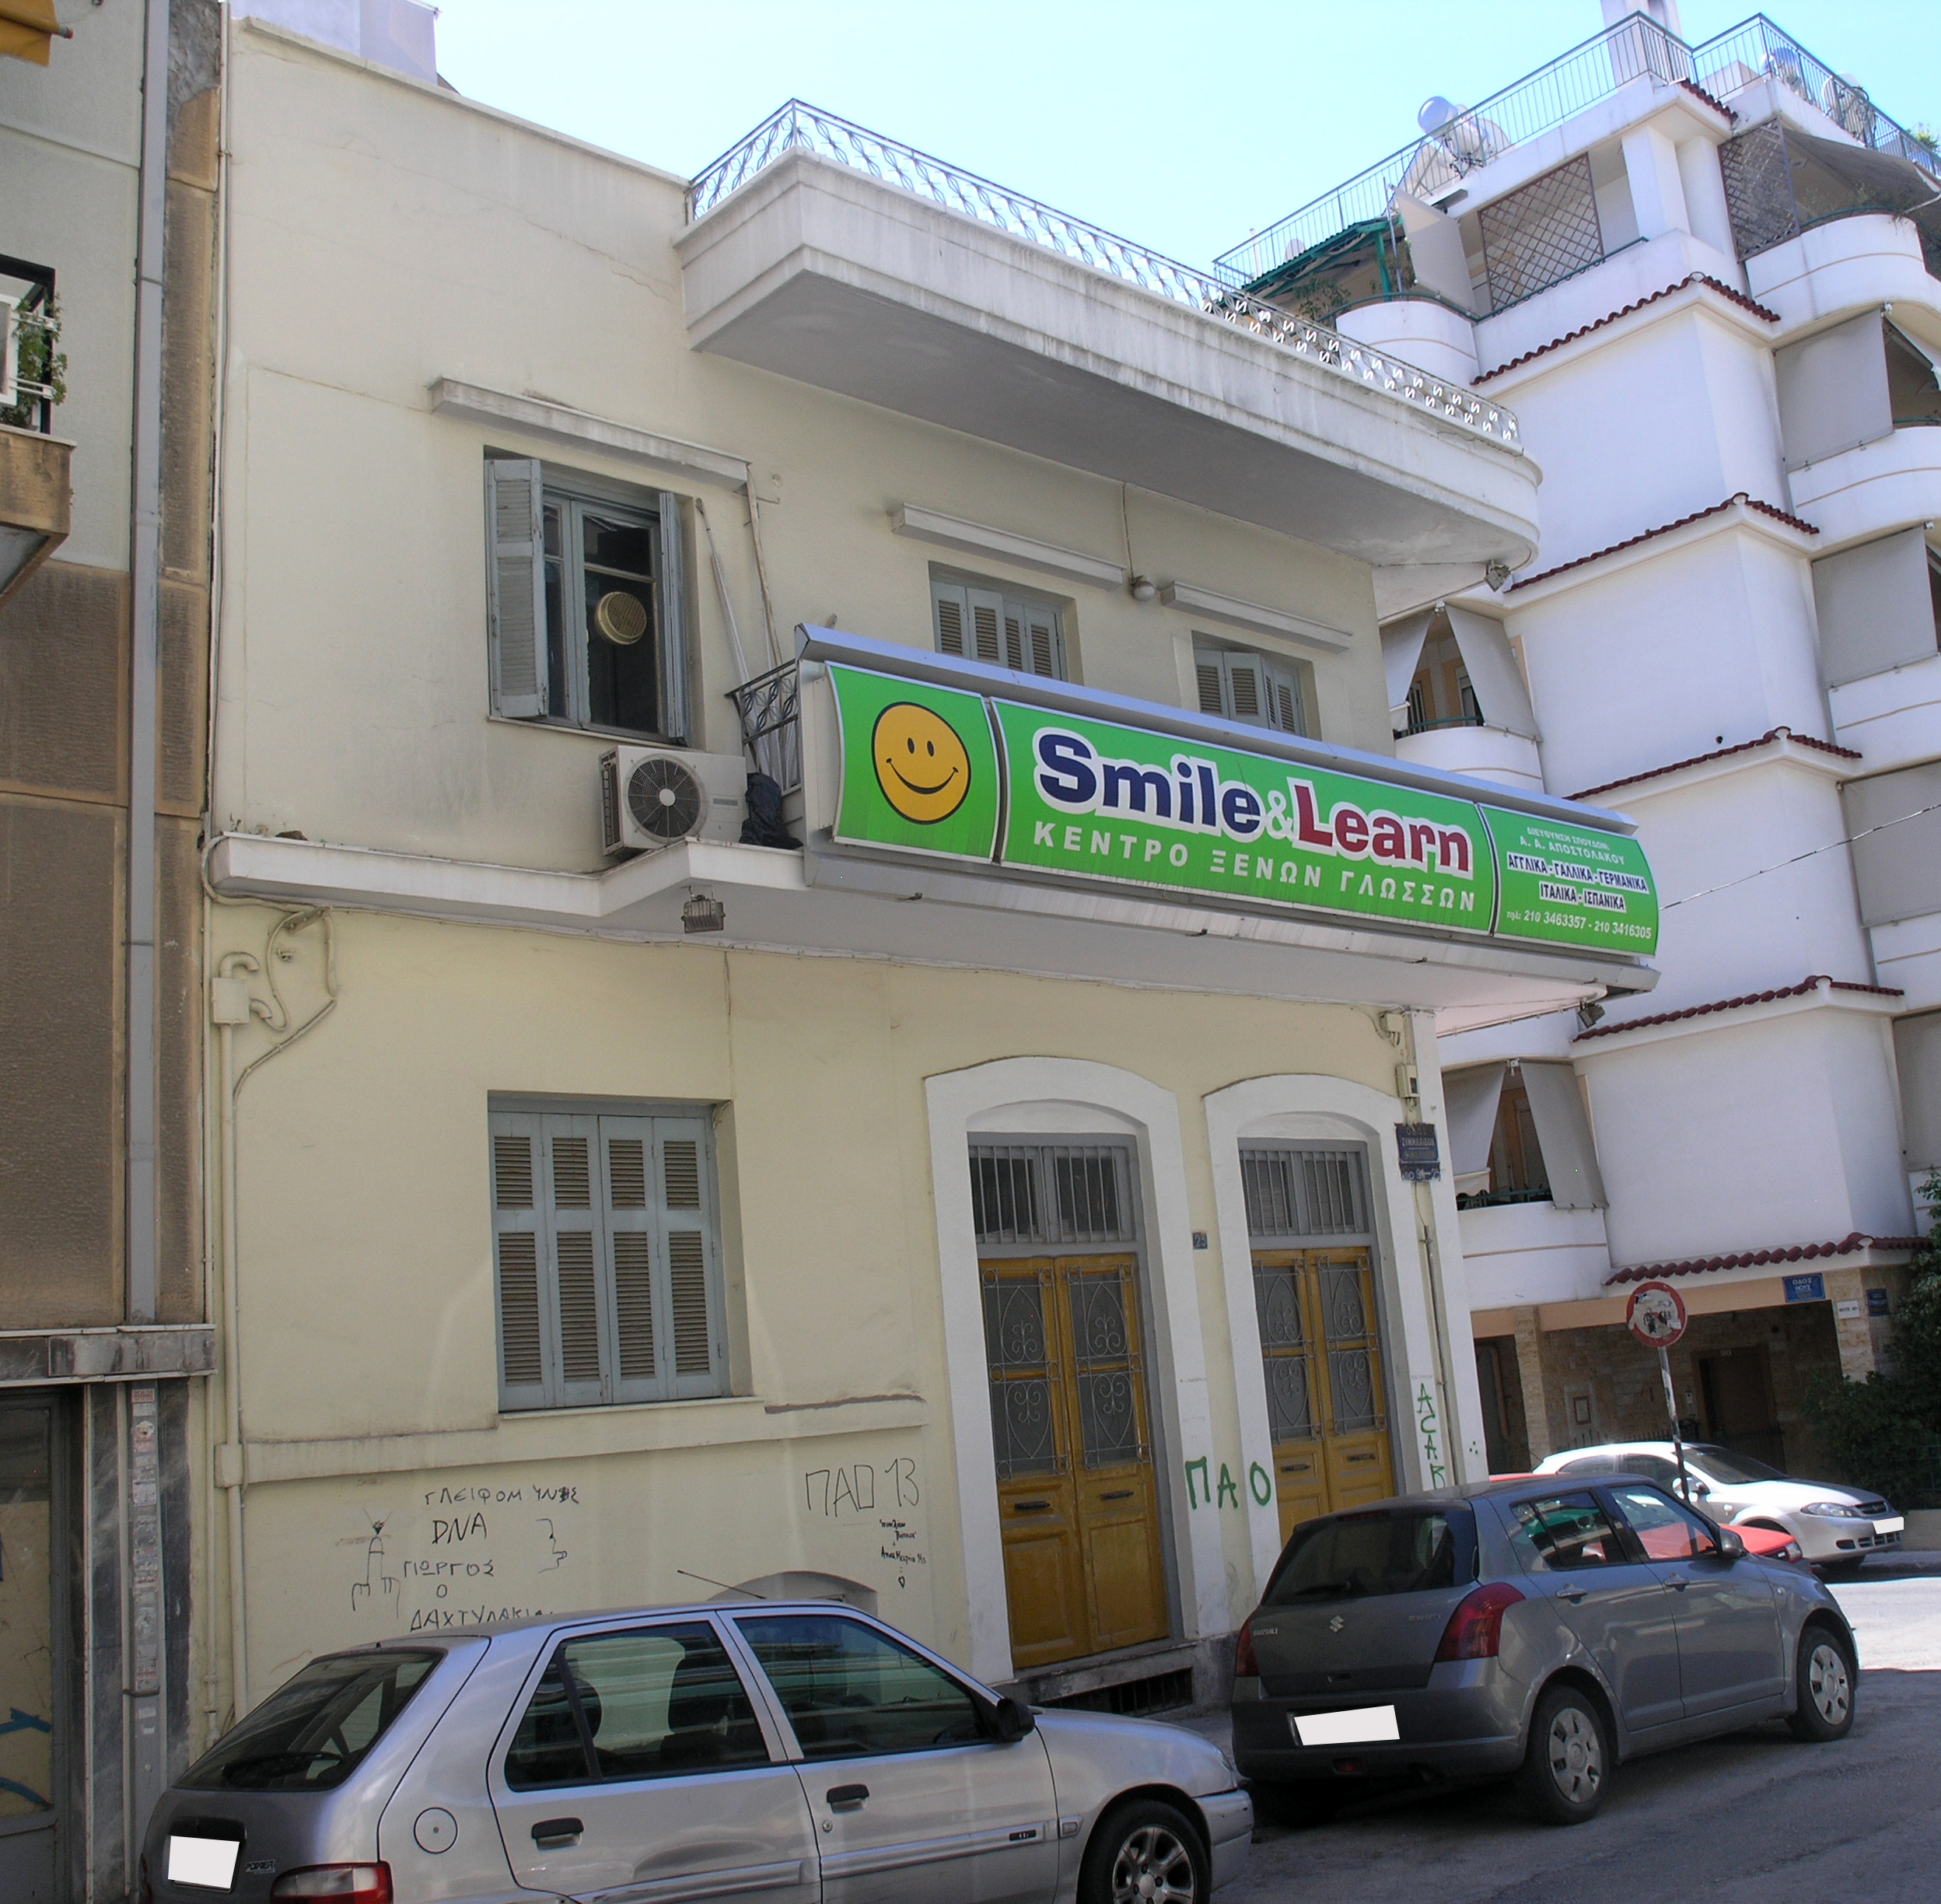 View of the façade on Symmachidon street